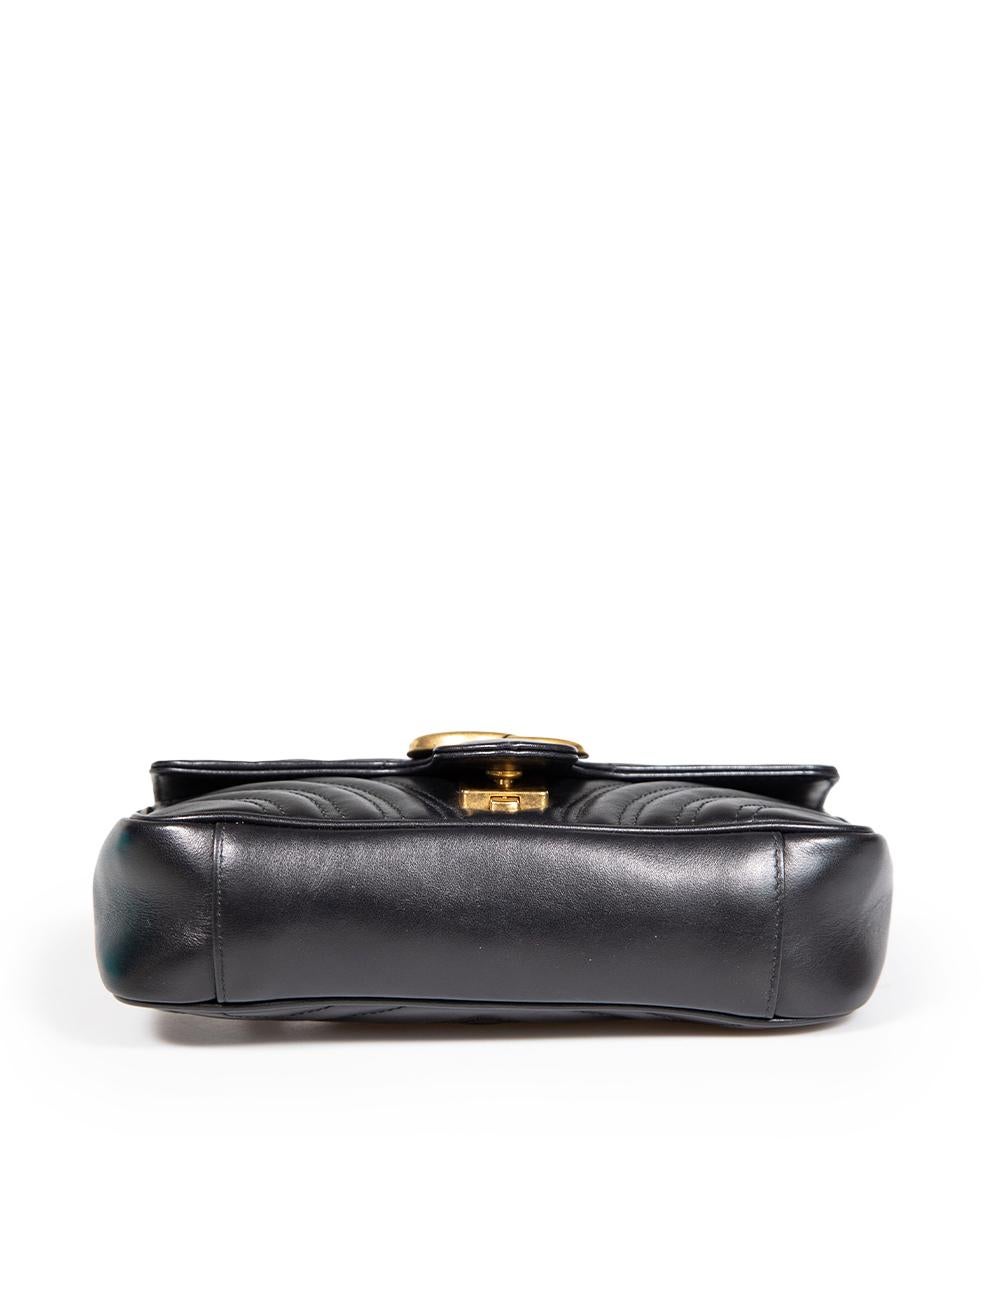 Women's Gucci Black Leather Mini GG Marmont Crossbody Bag